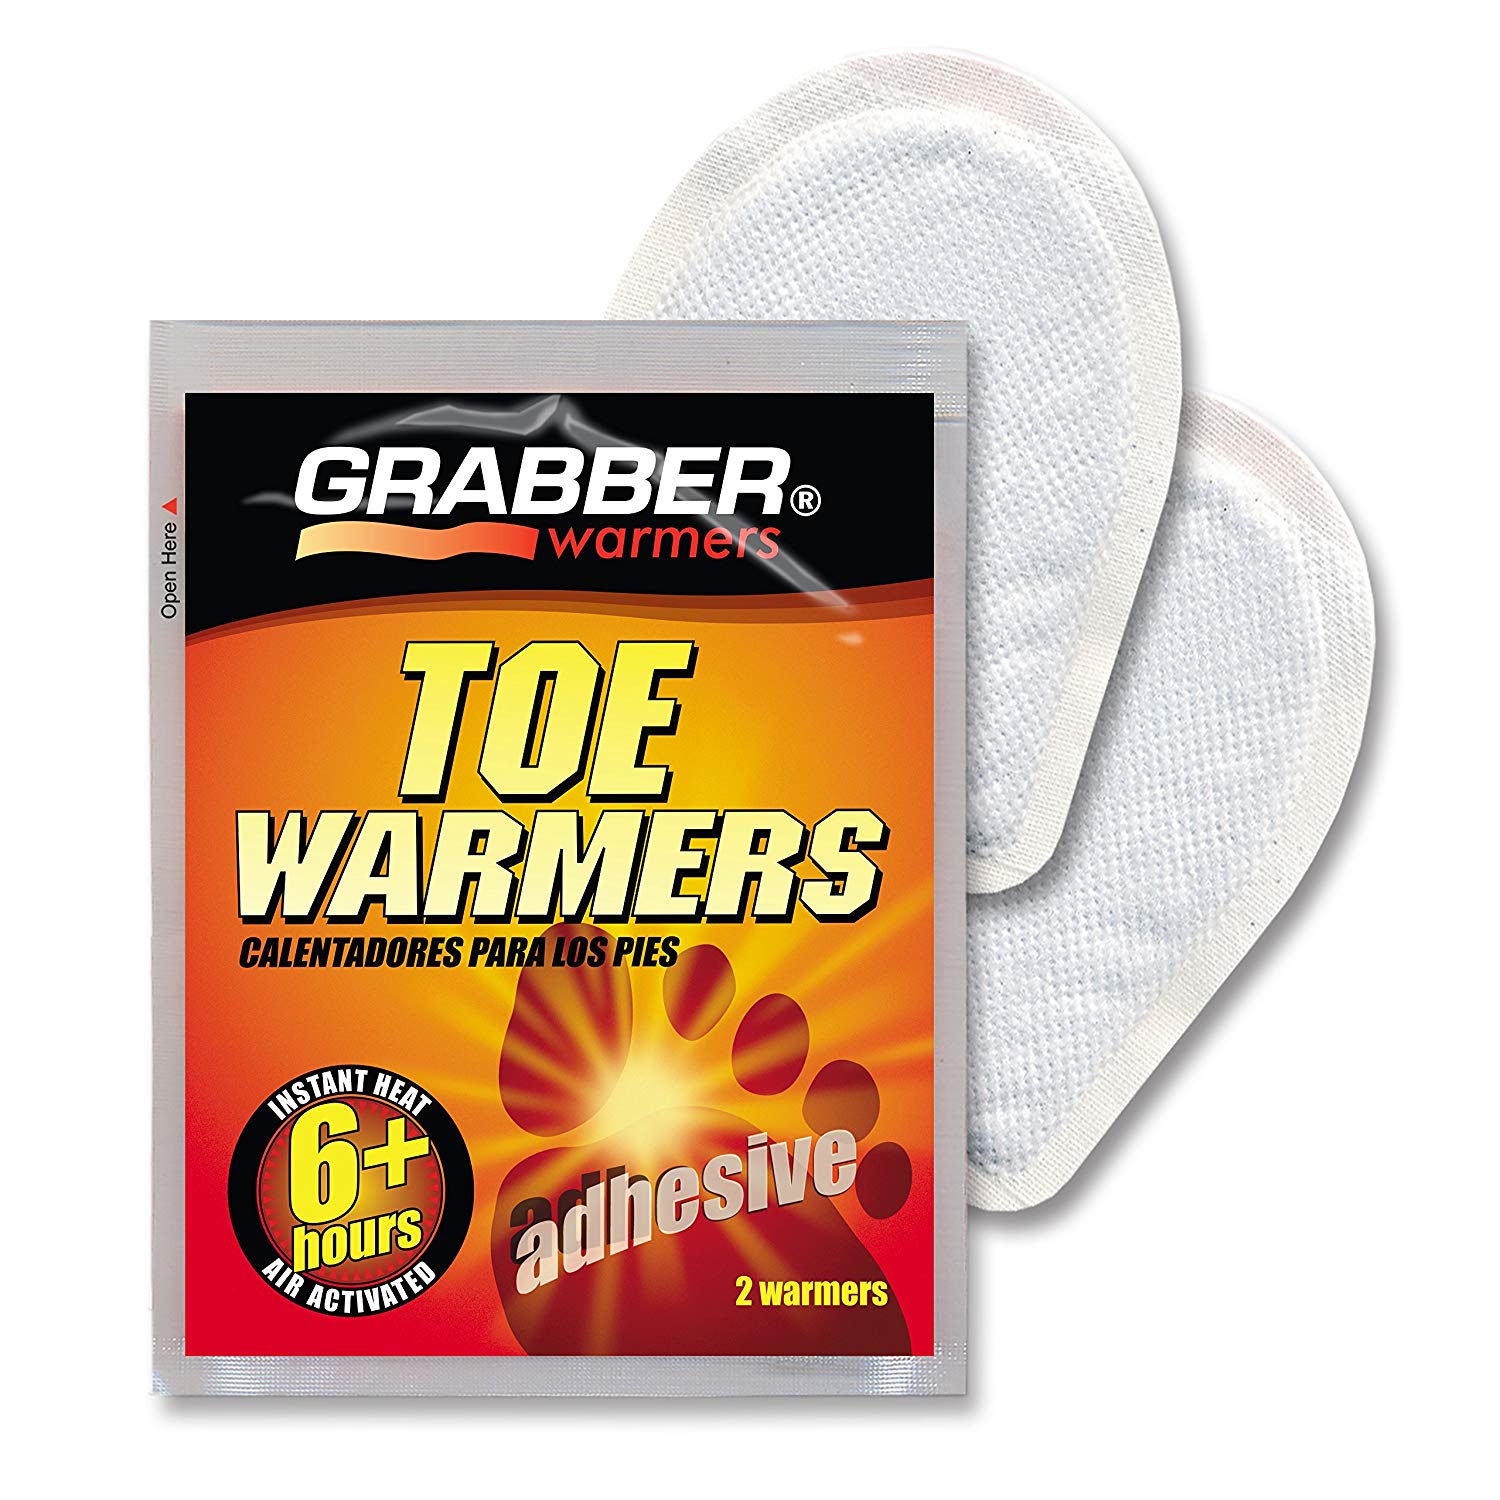 Grabber Toe Warmers - 2 Pack - image 2 of 2